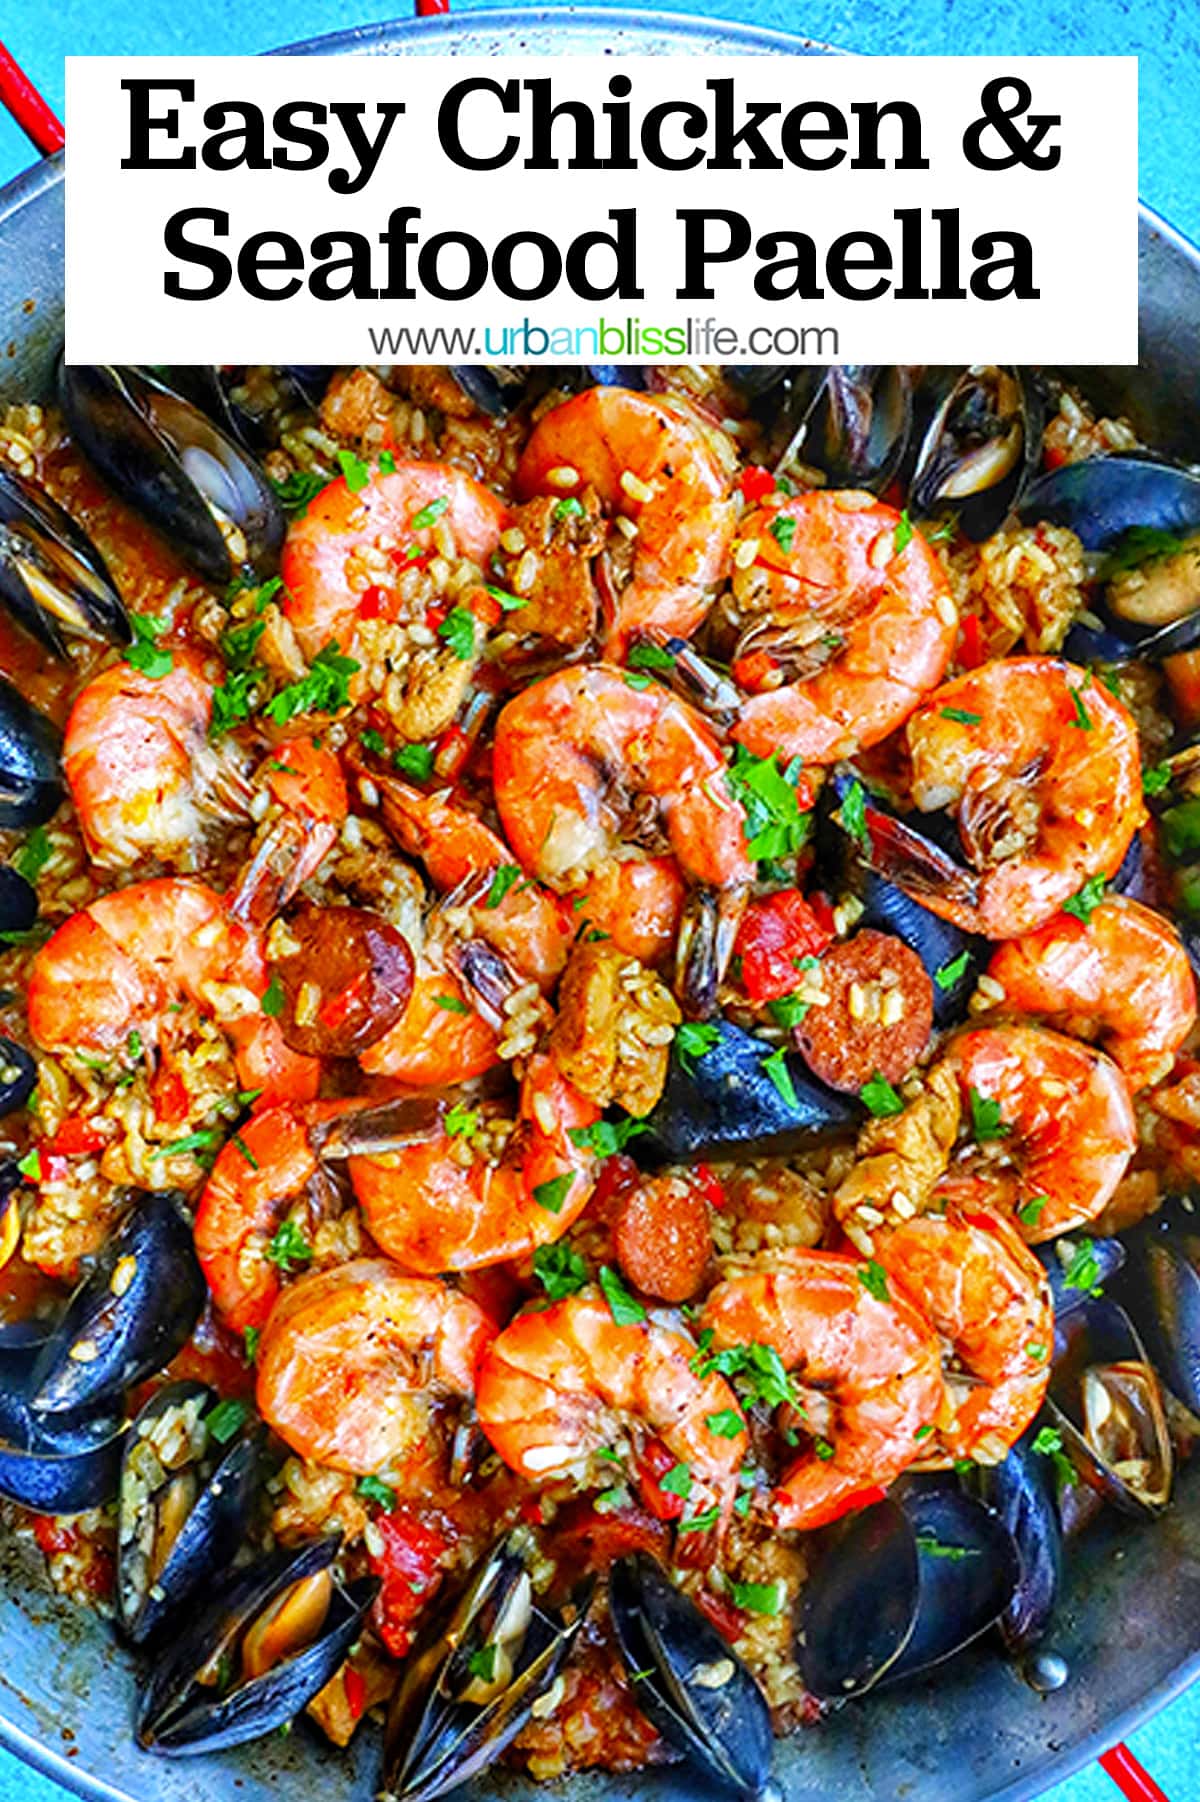 Easy Seafood Paella Recipe - Urban Bliss Life